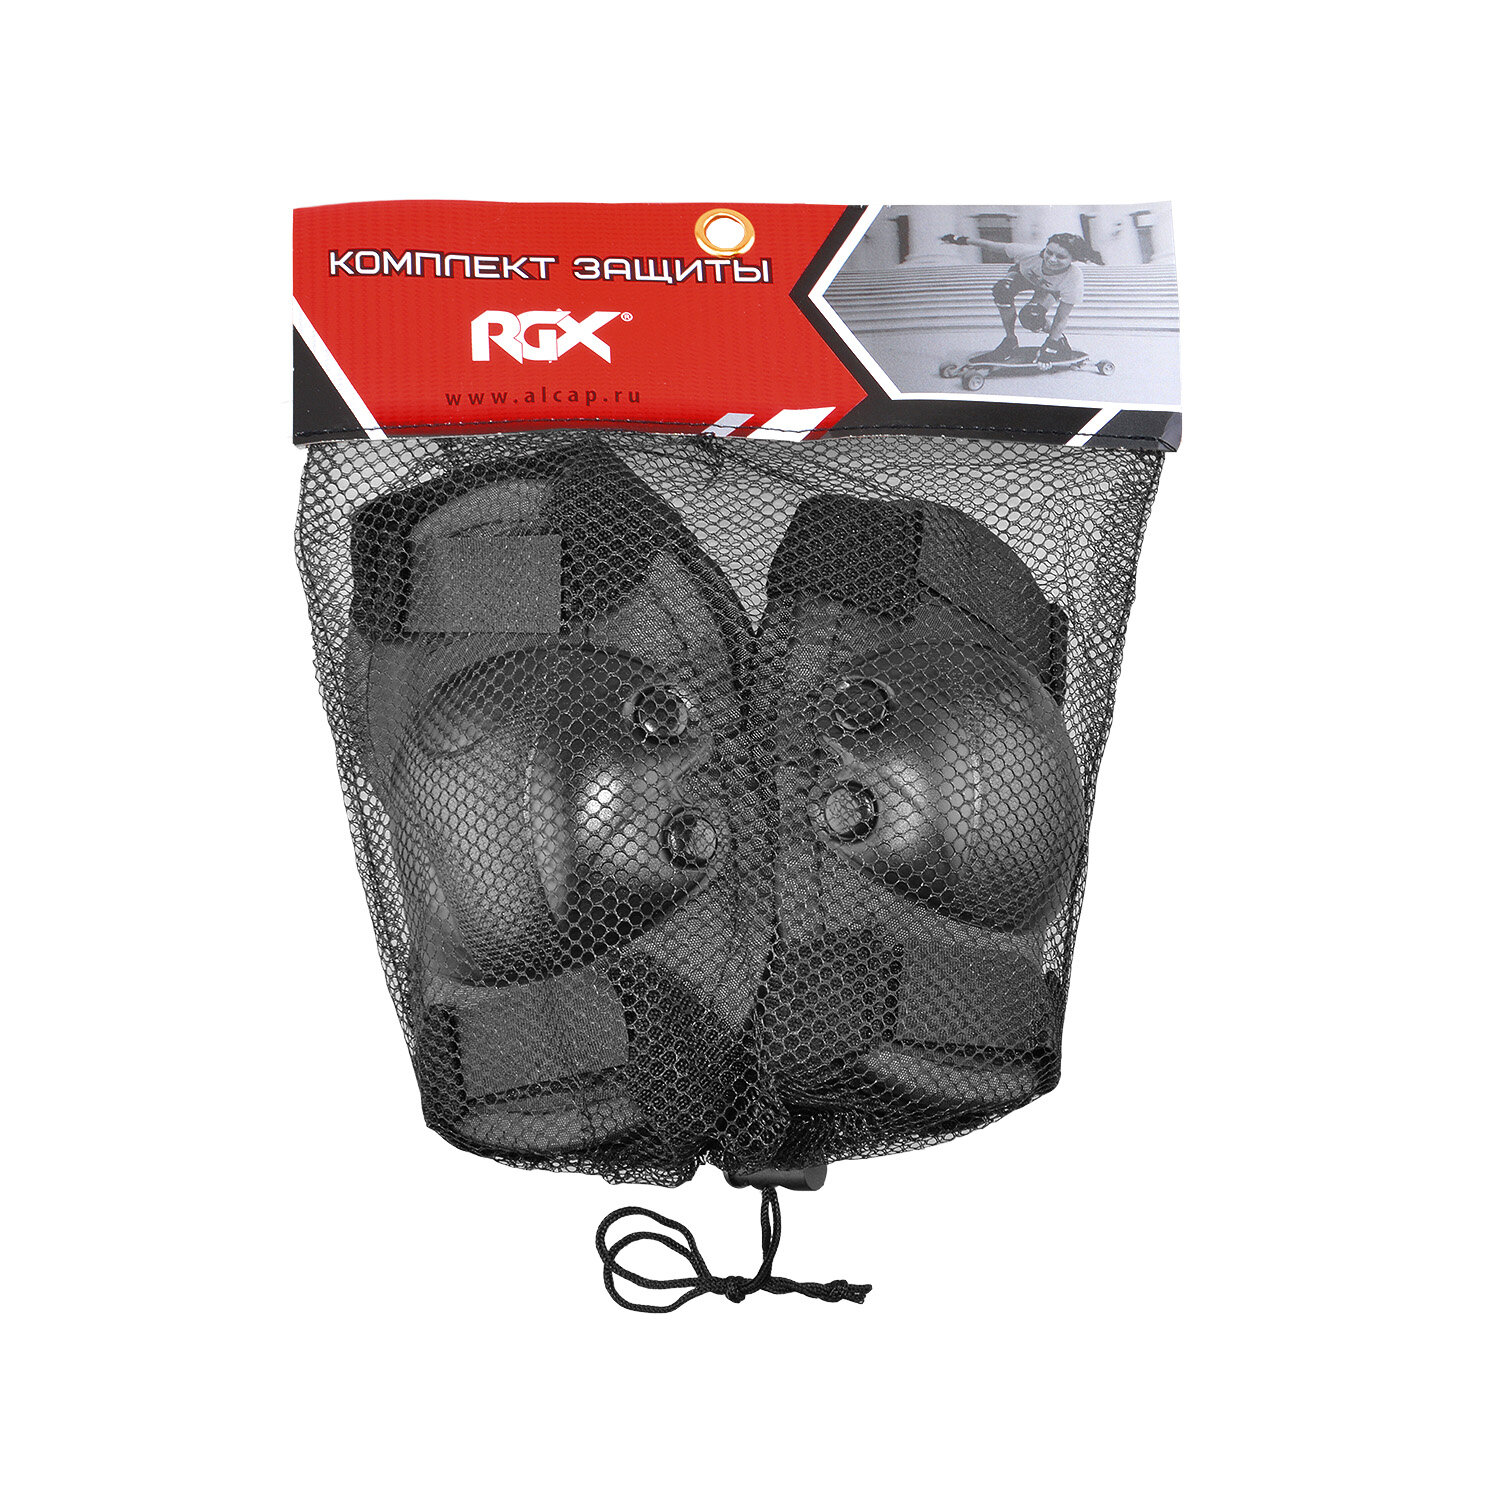 Защита Rgx 104b Black размер S